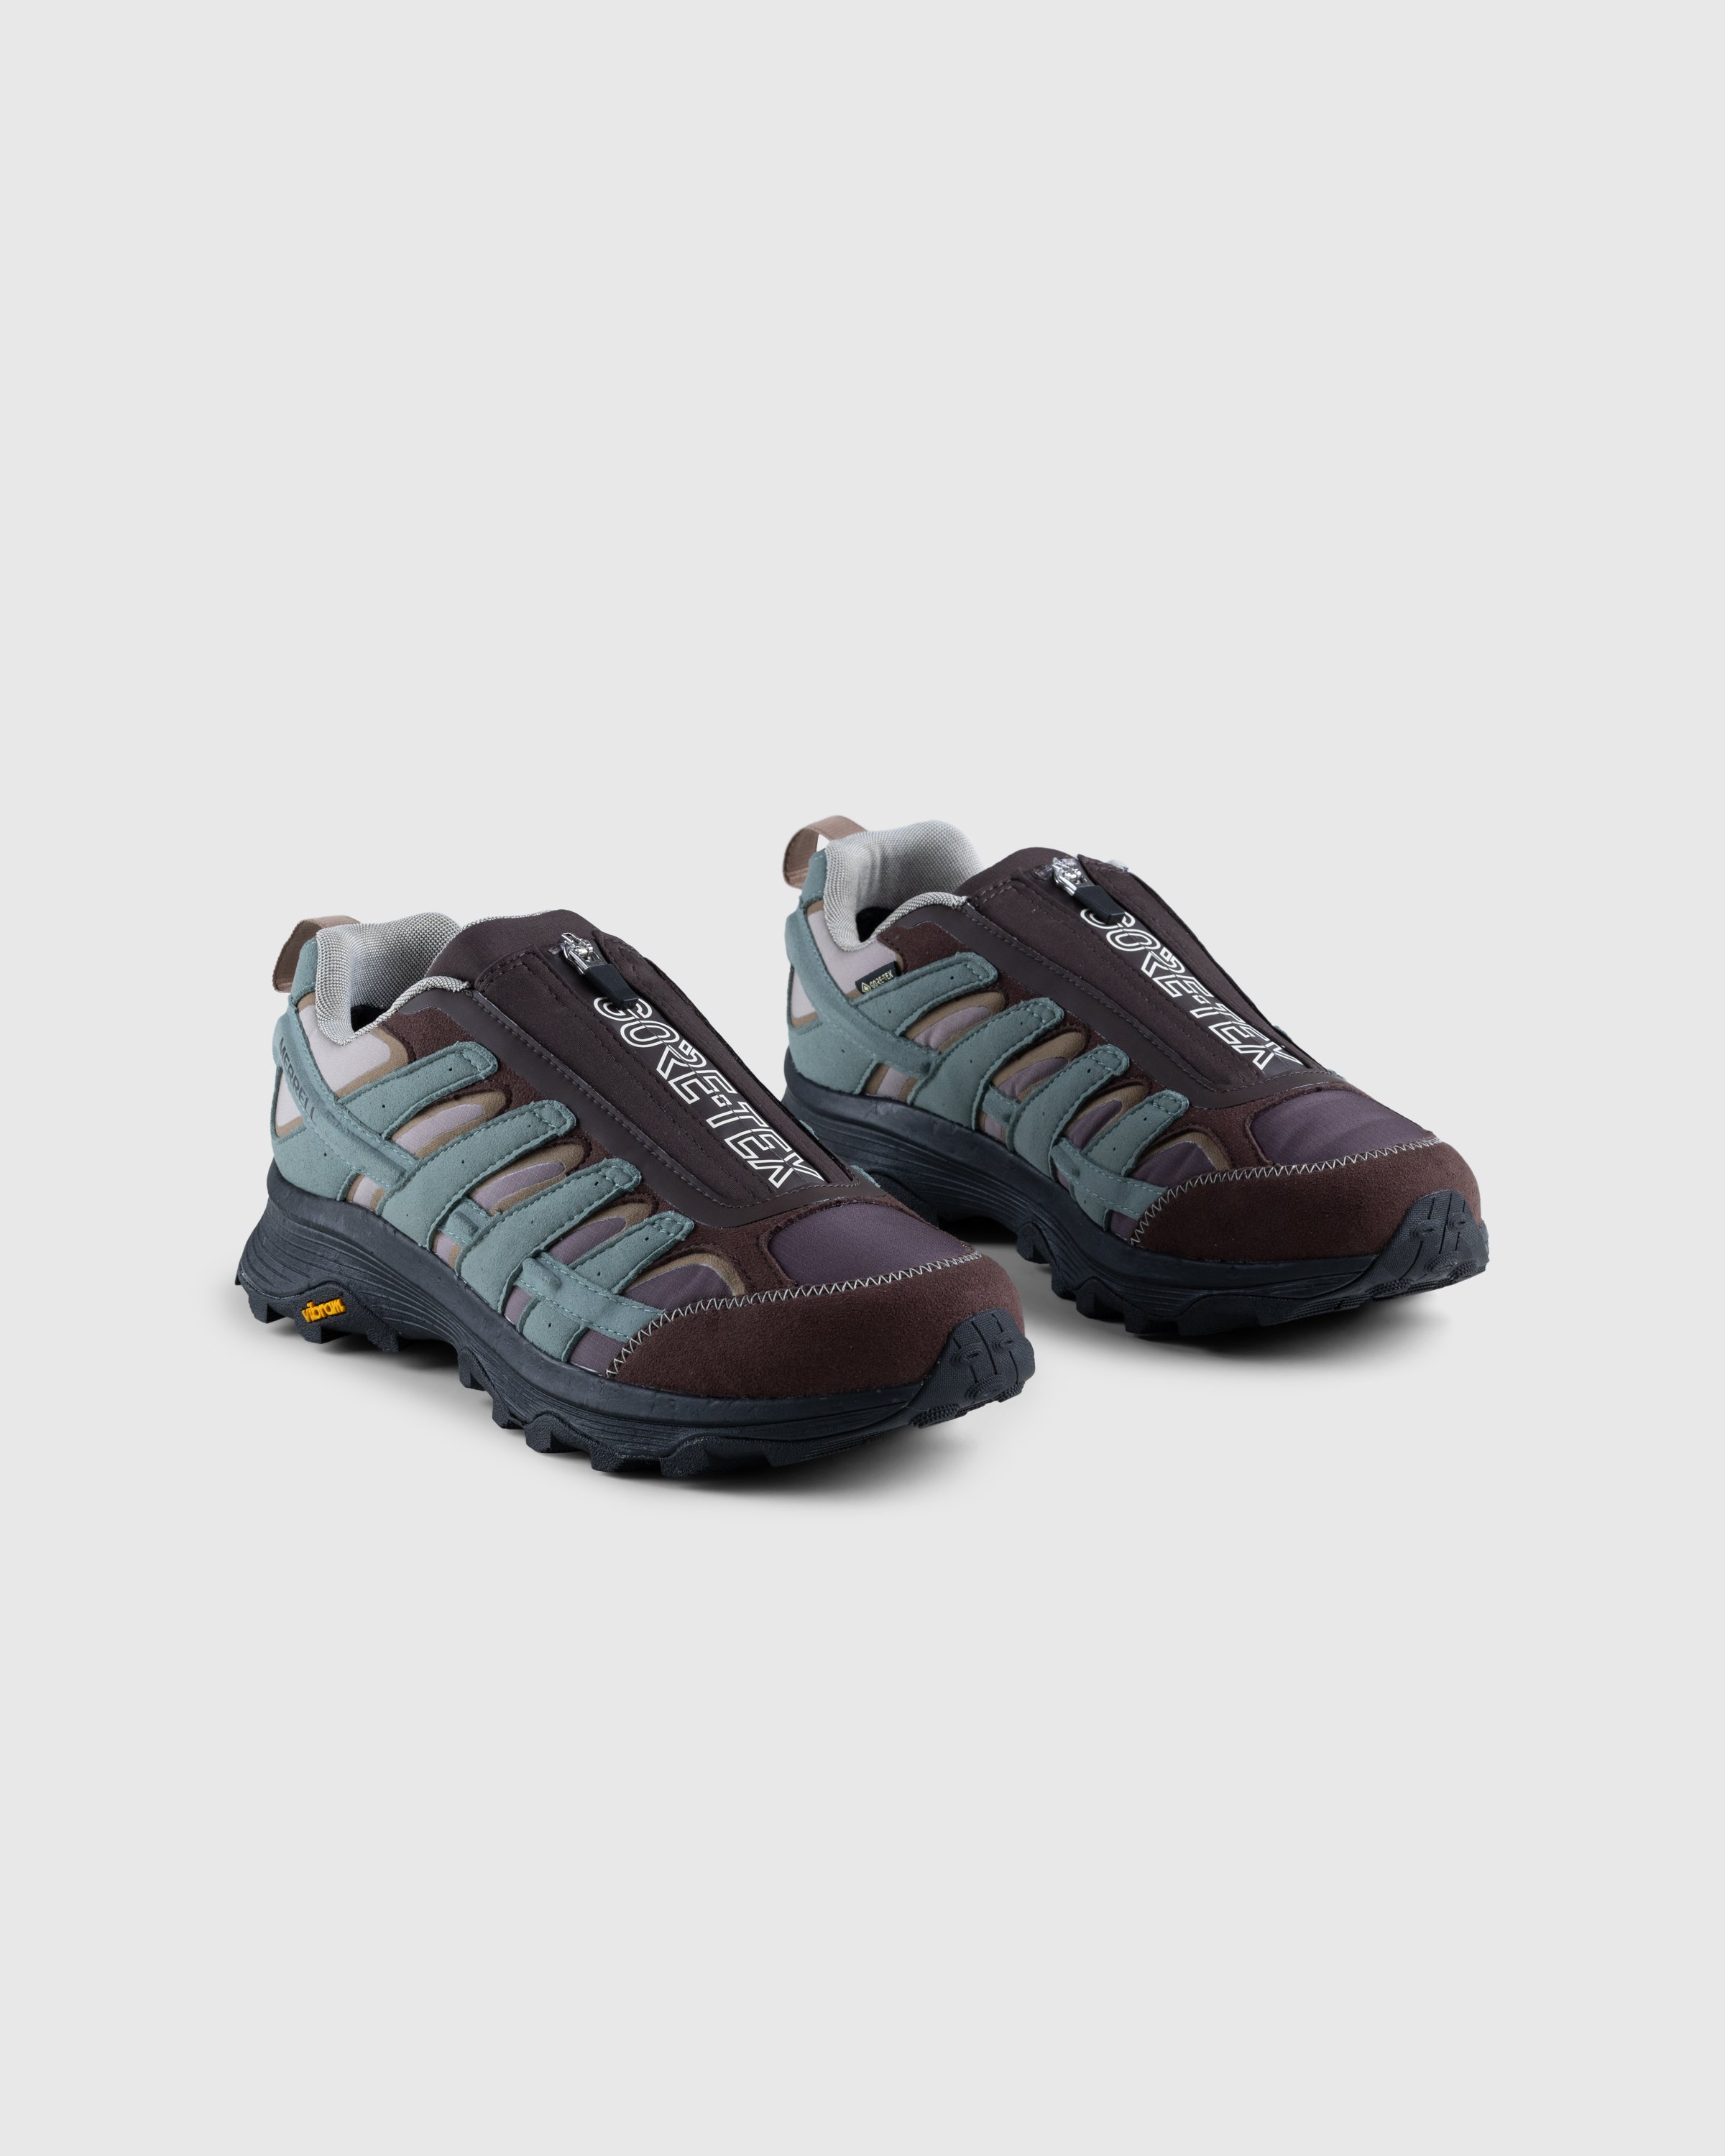 Merrell - Moab Speed Zip GORE-TEX Forest/Espresso - Footwear - Multi - Image 3